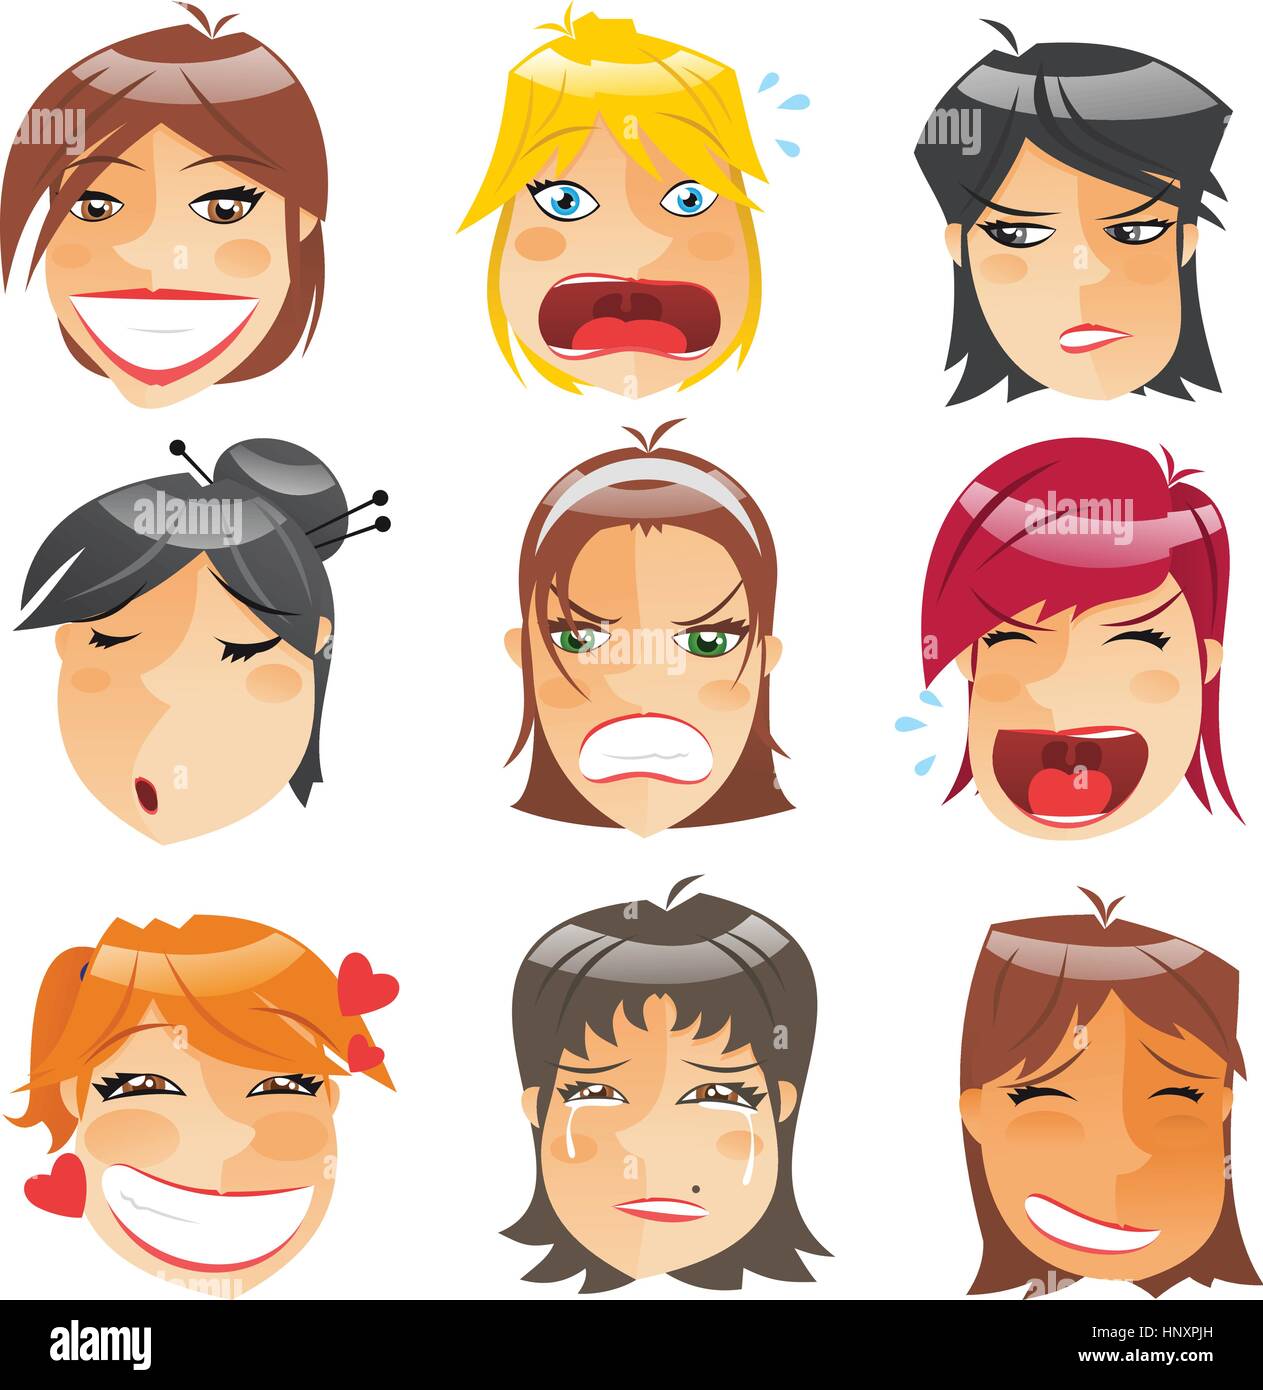 Femme Chef de caractères des gens Avatar Profil d'expressions de l'ensemble de vues avant, vector illustration. Illustration de Vecteur